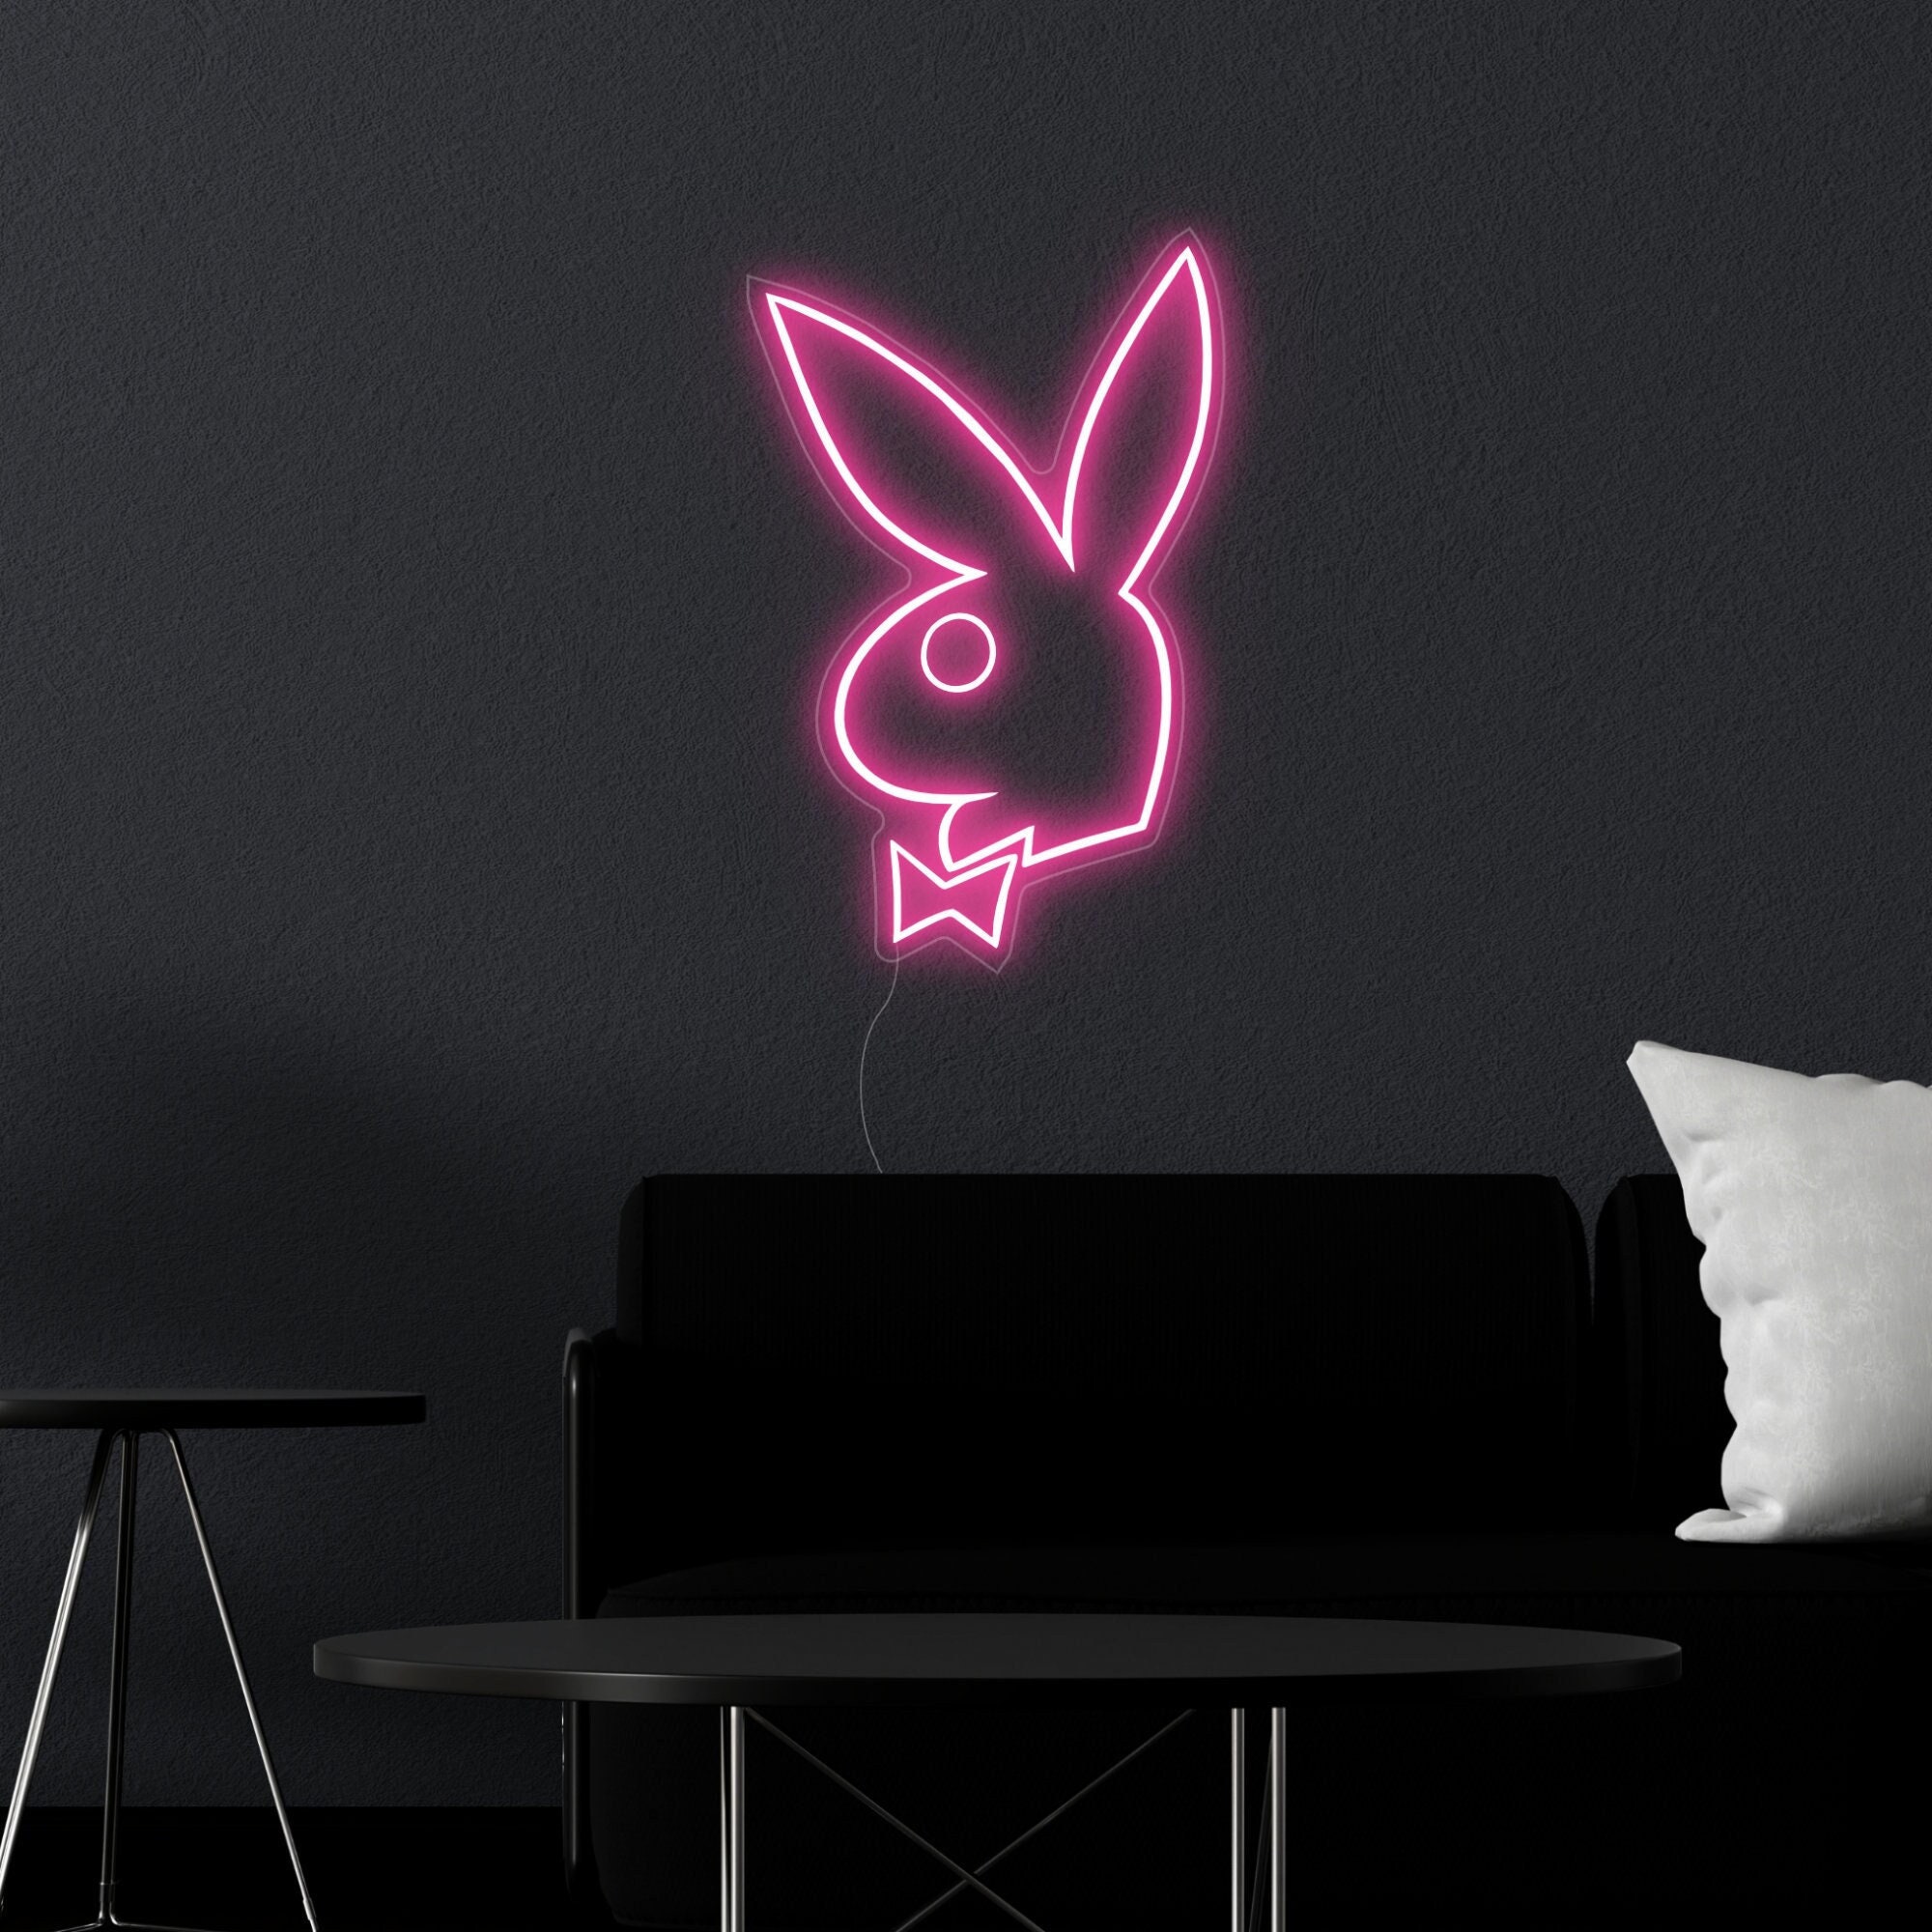 Playboy - Playboy Logo, Bad Bunny, Home Bar Metal Sign, Led Light Sign -  Lynseriess